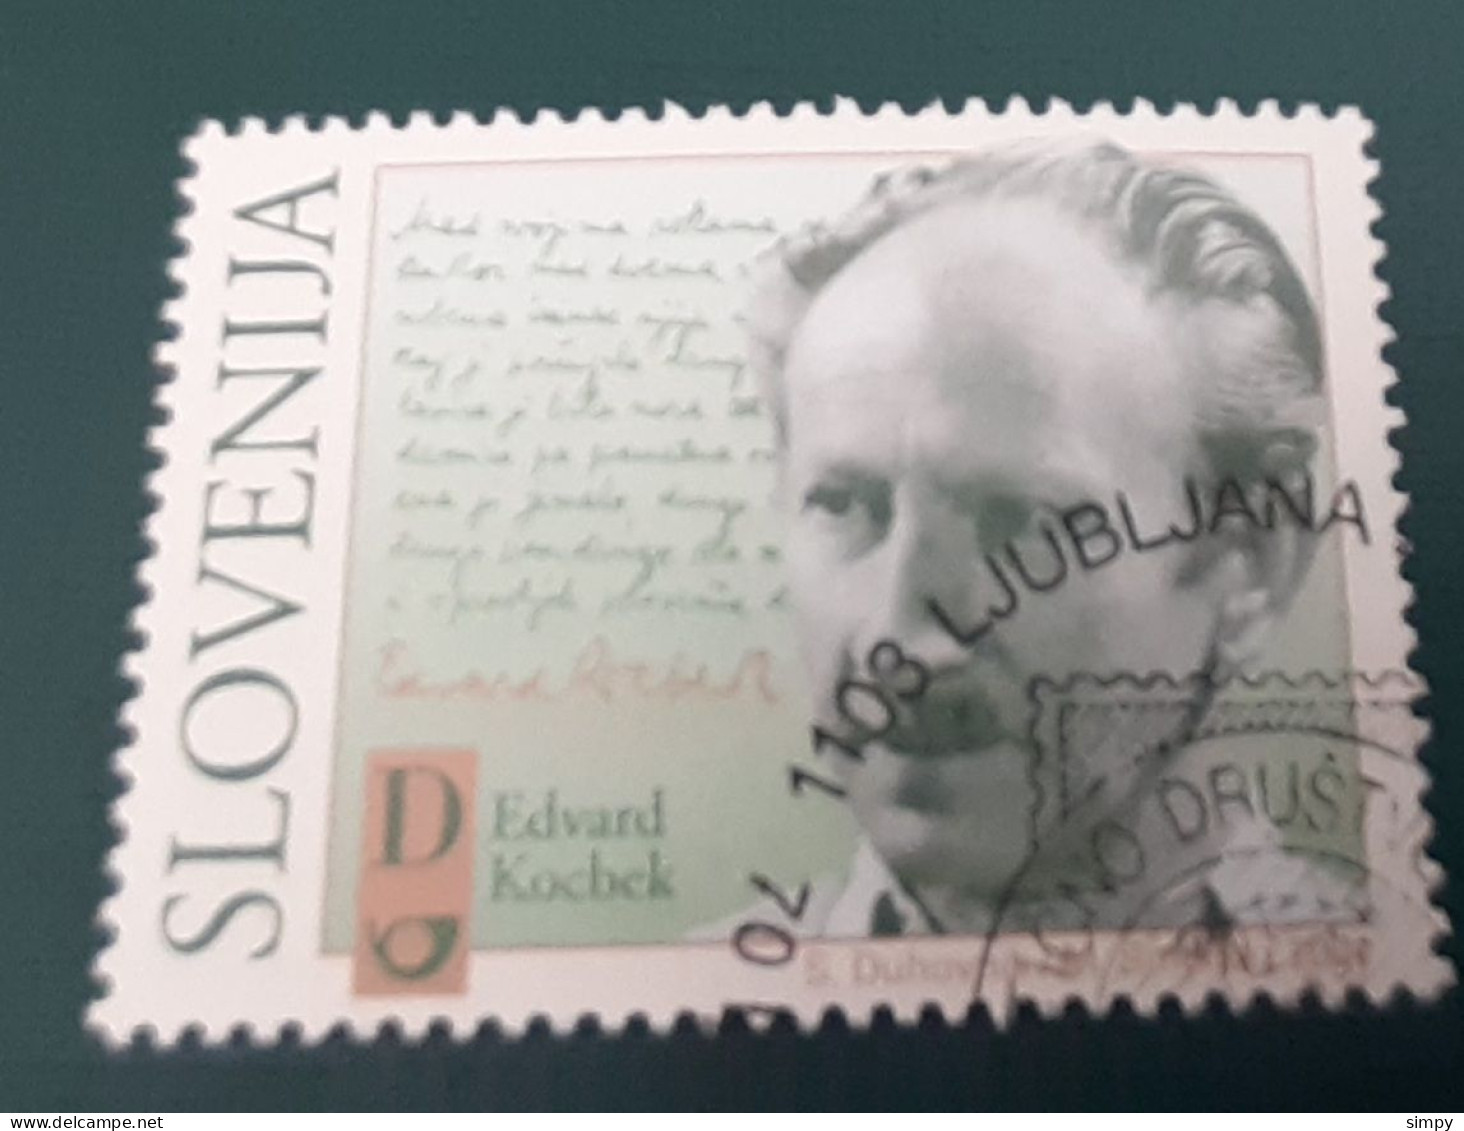 SLOVENIA 2004 Edvard Kocbek Michel 455 Used Stamp - Slowenien